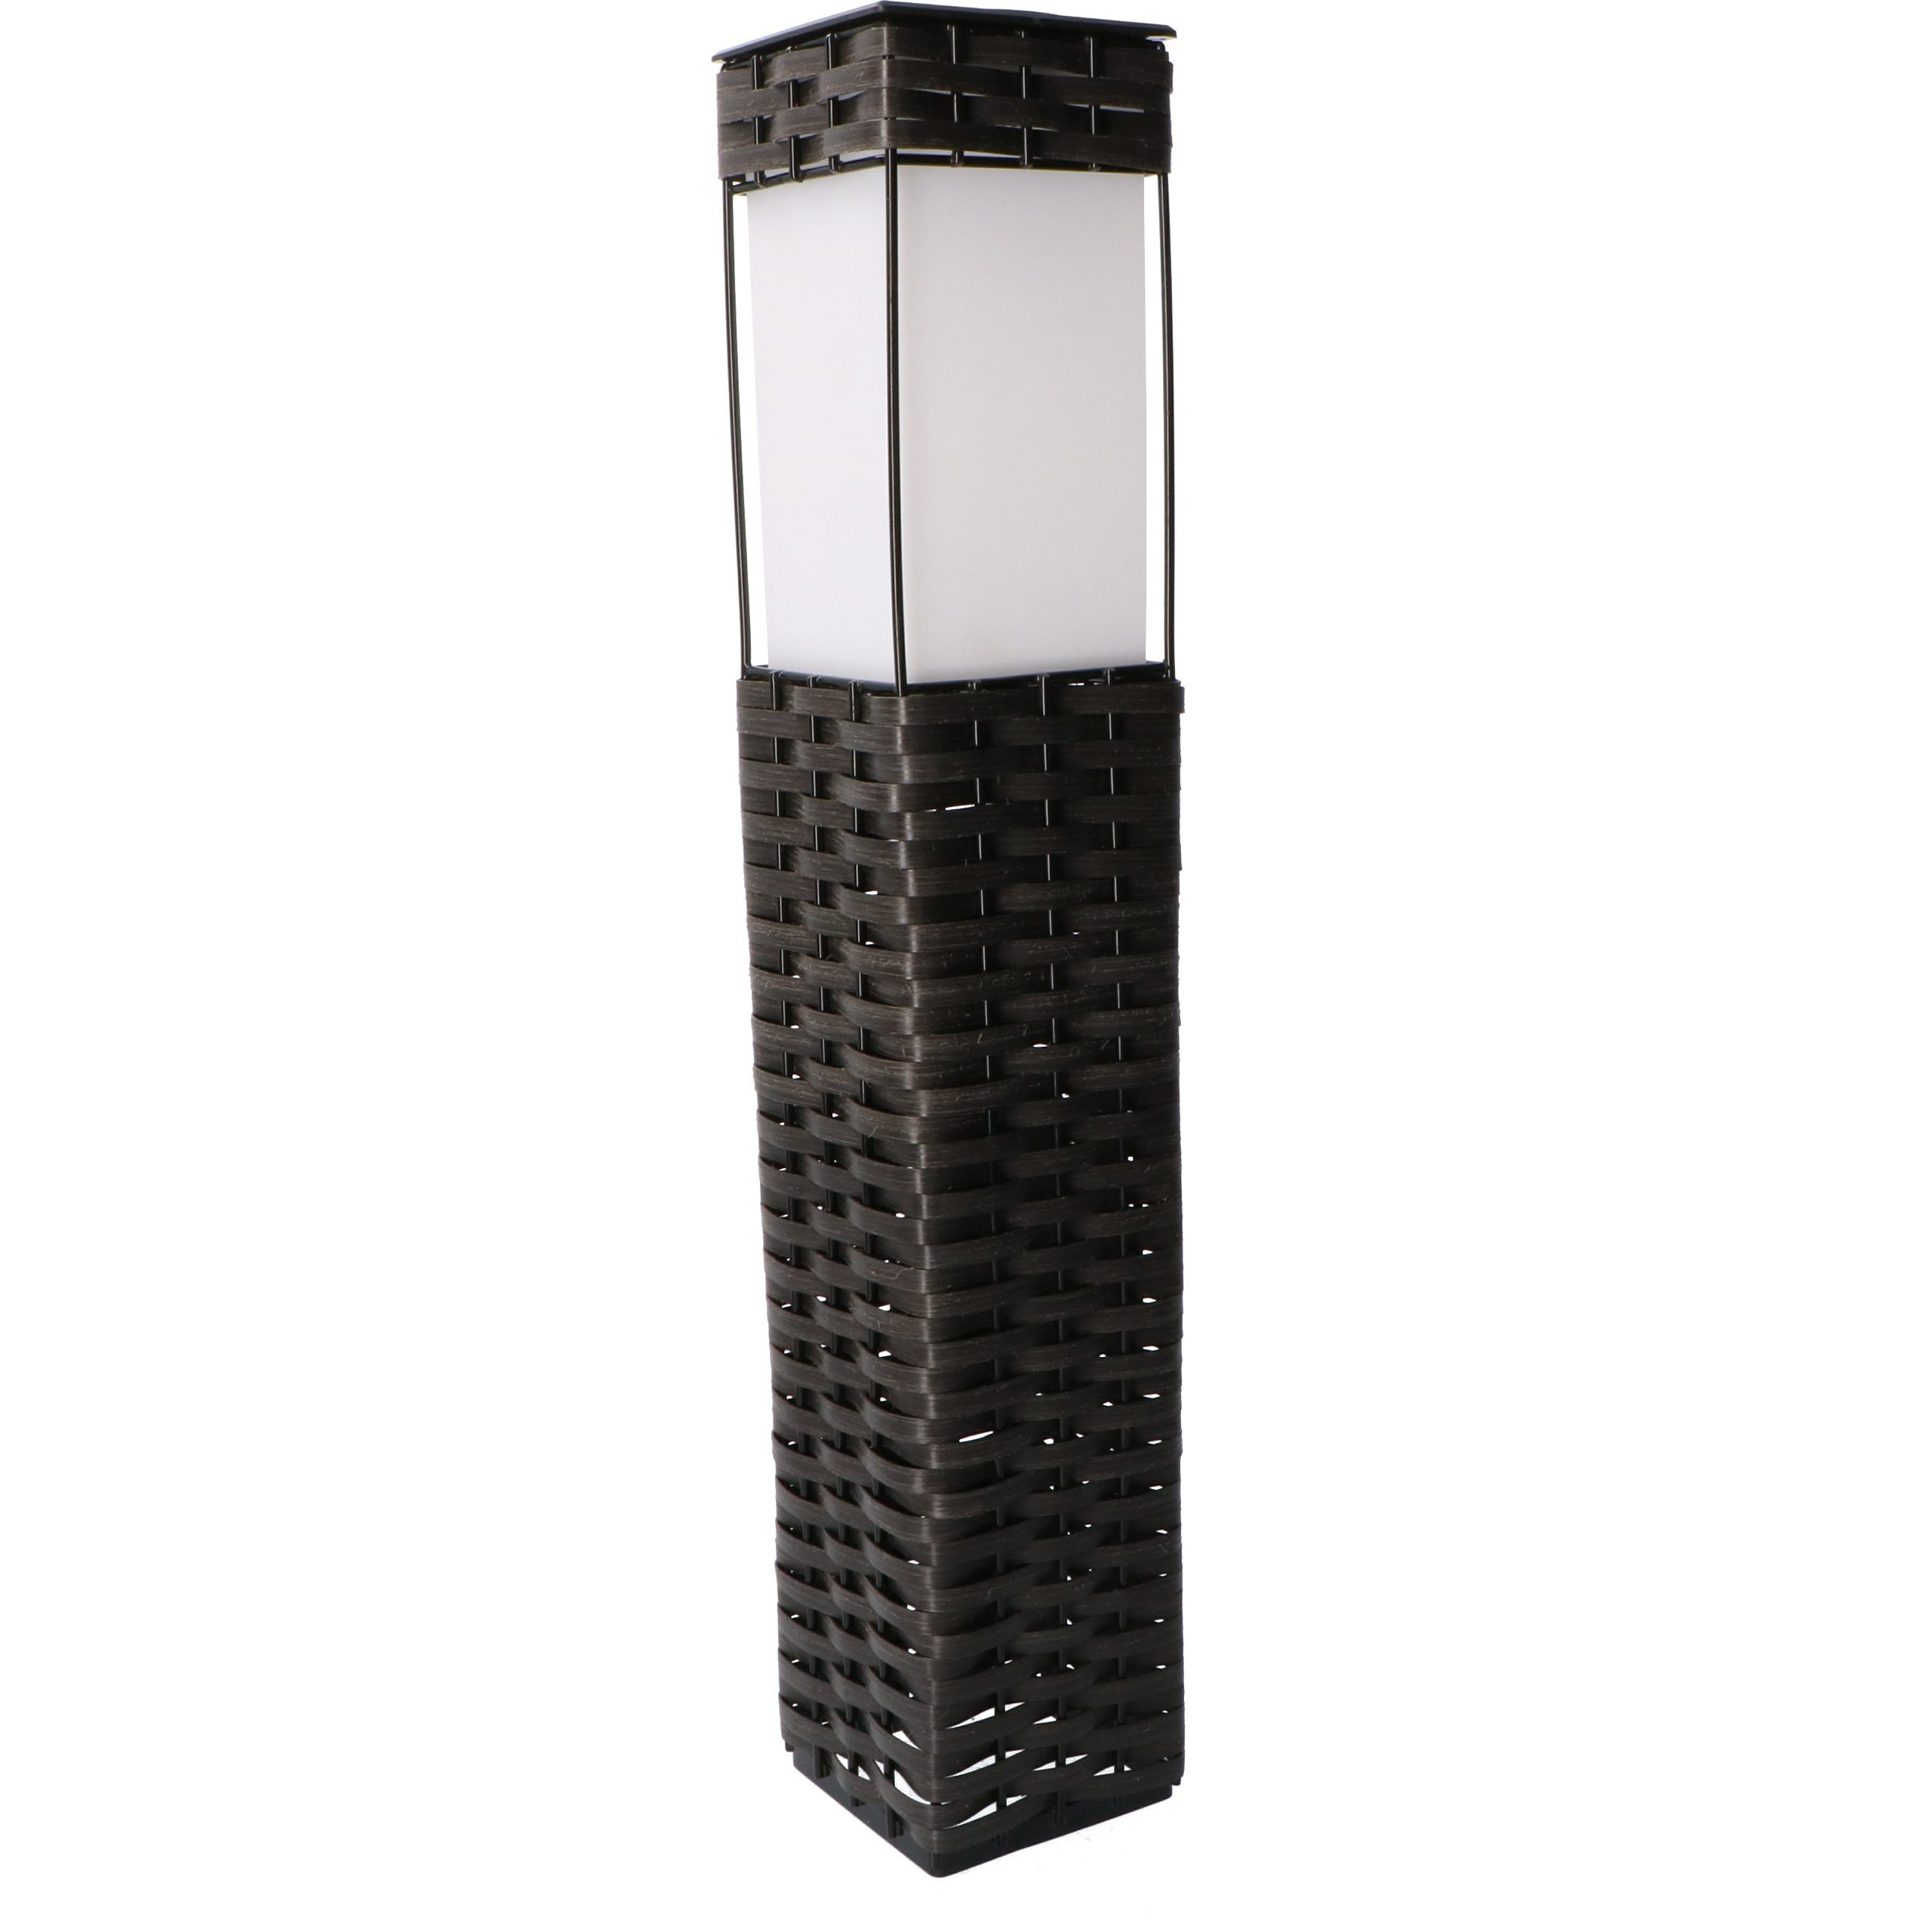 LED's light LED Solarleuchte 1000433 Solar LED-Wegeleuchte, LED, Polyrattan schwarz 50cm IP44